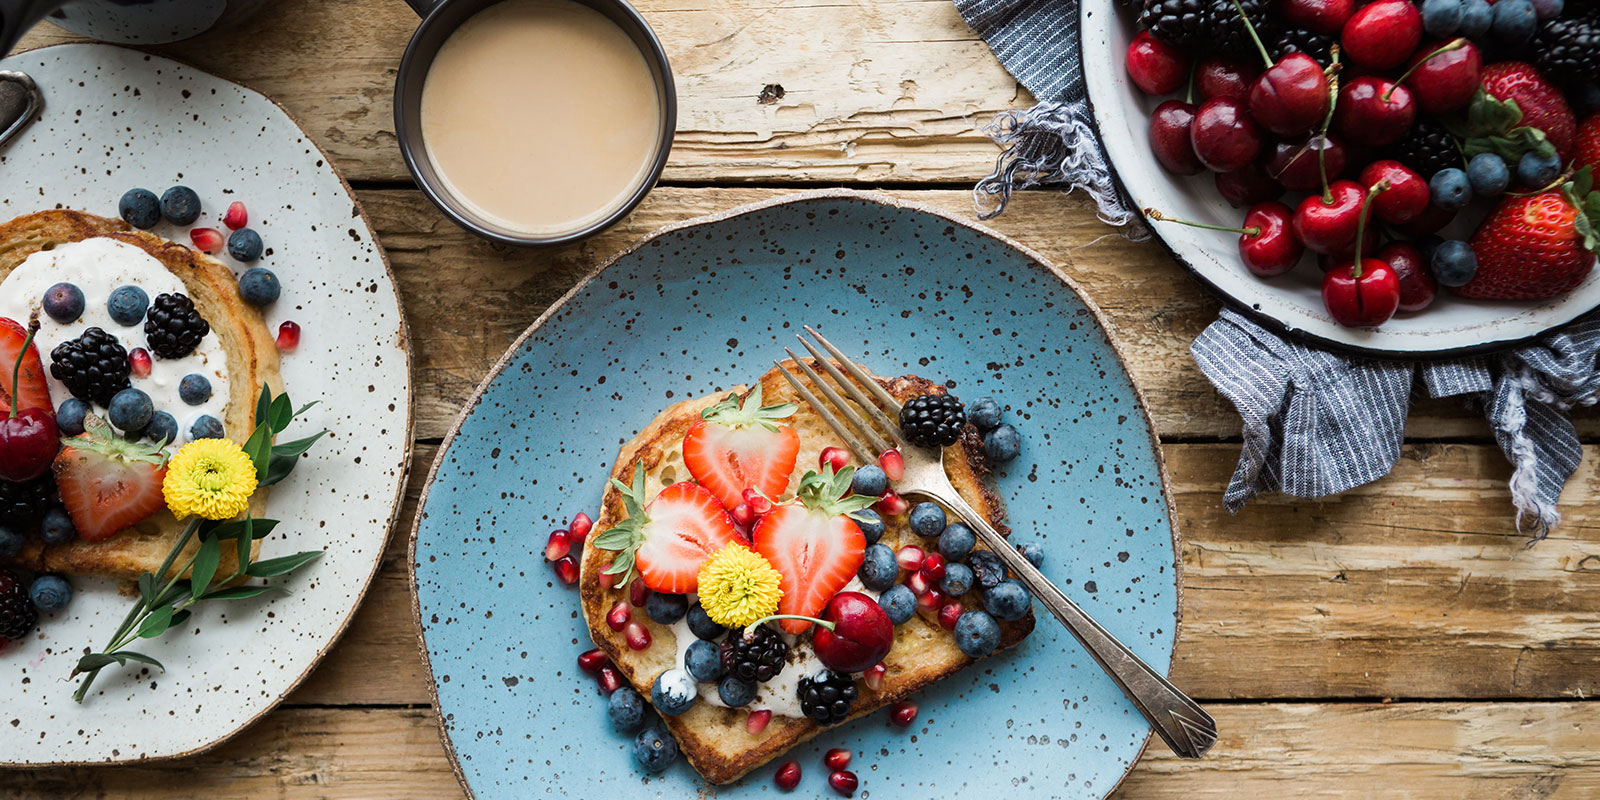 Breakfast plate with toast, yogurt and berries